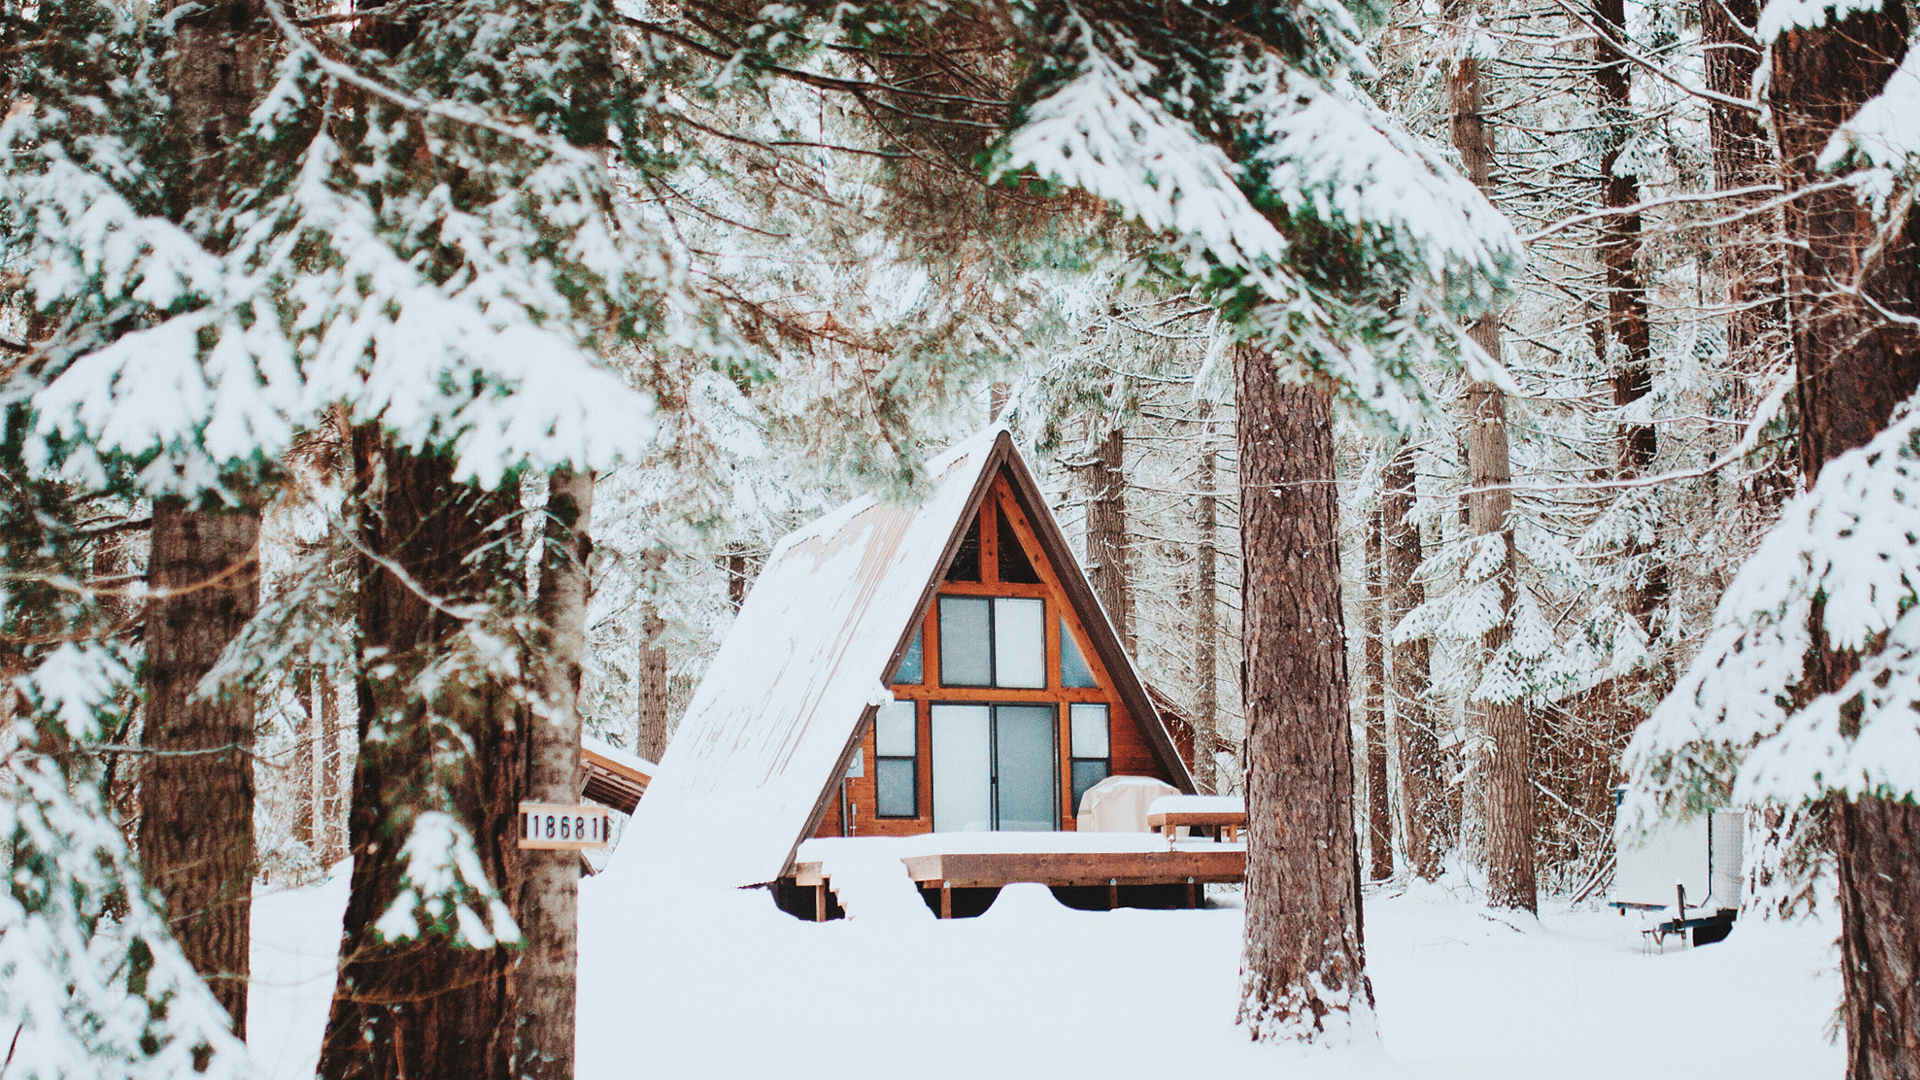  cozy winter cabins make cold enjoyable 